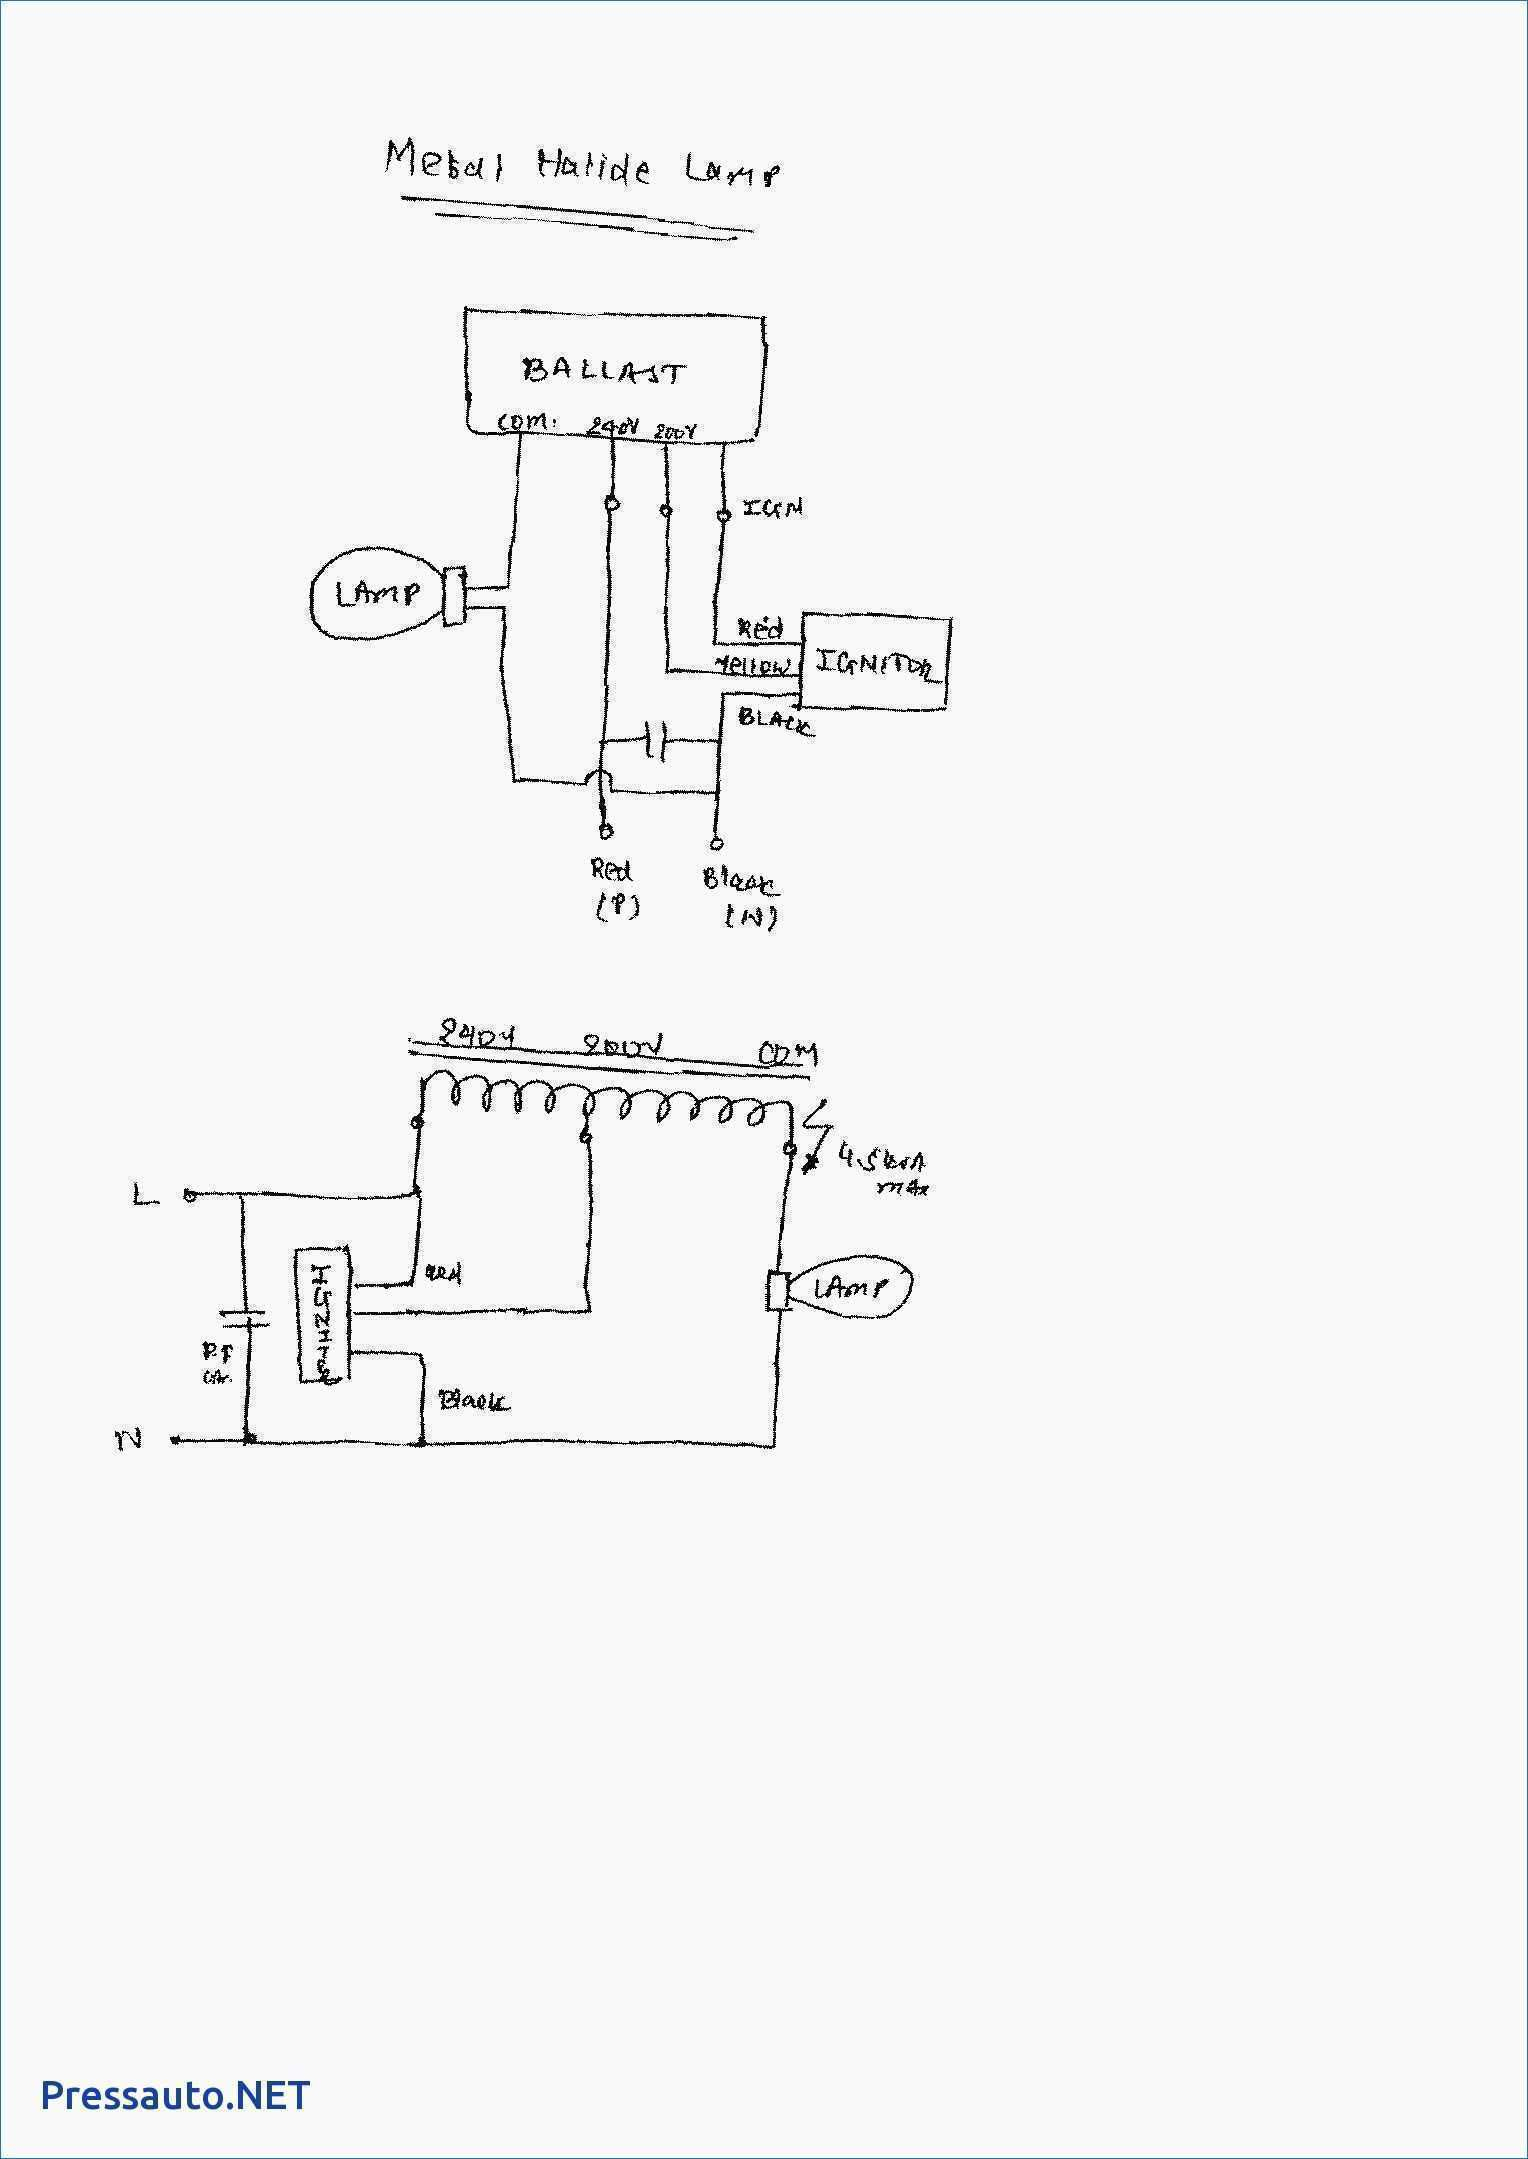 1000 Watt High Pressure Sodium Ballast Wiring Diagram | Wiring Diagram - Mh Ballast Wiring Diagram